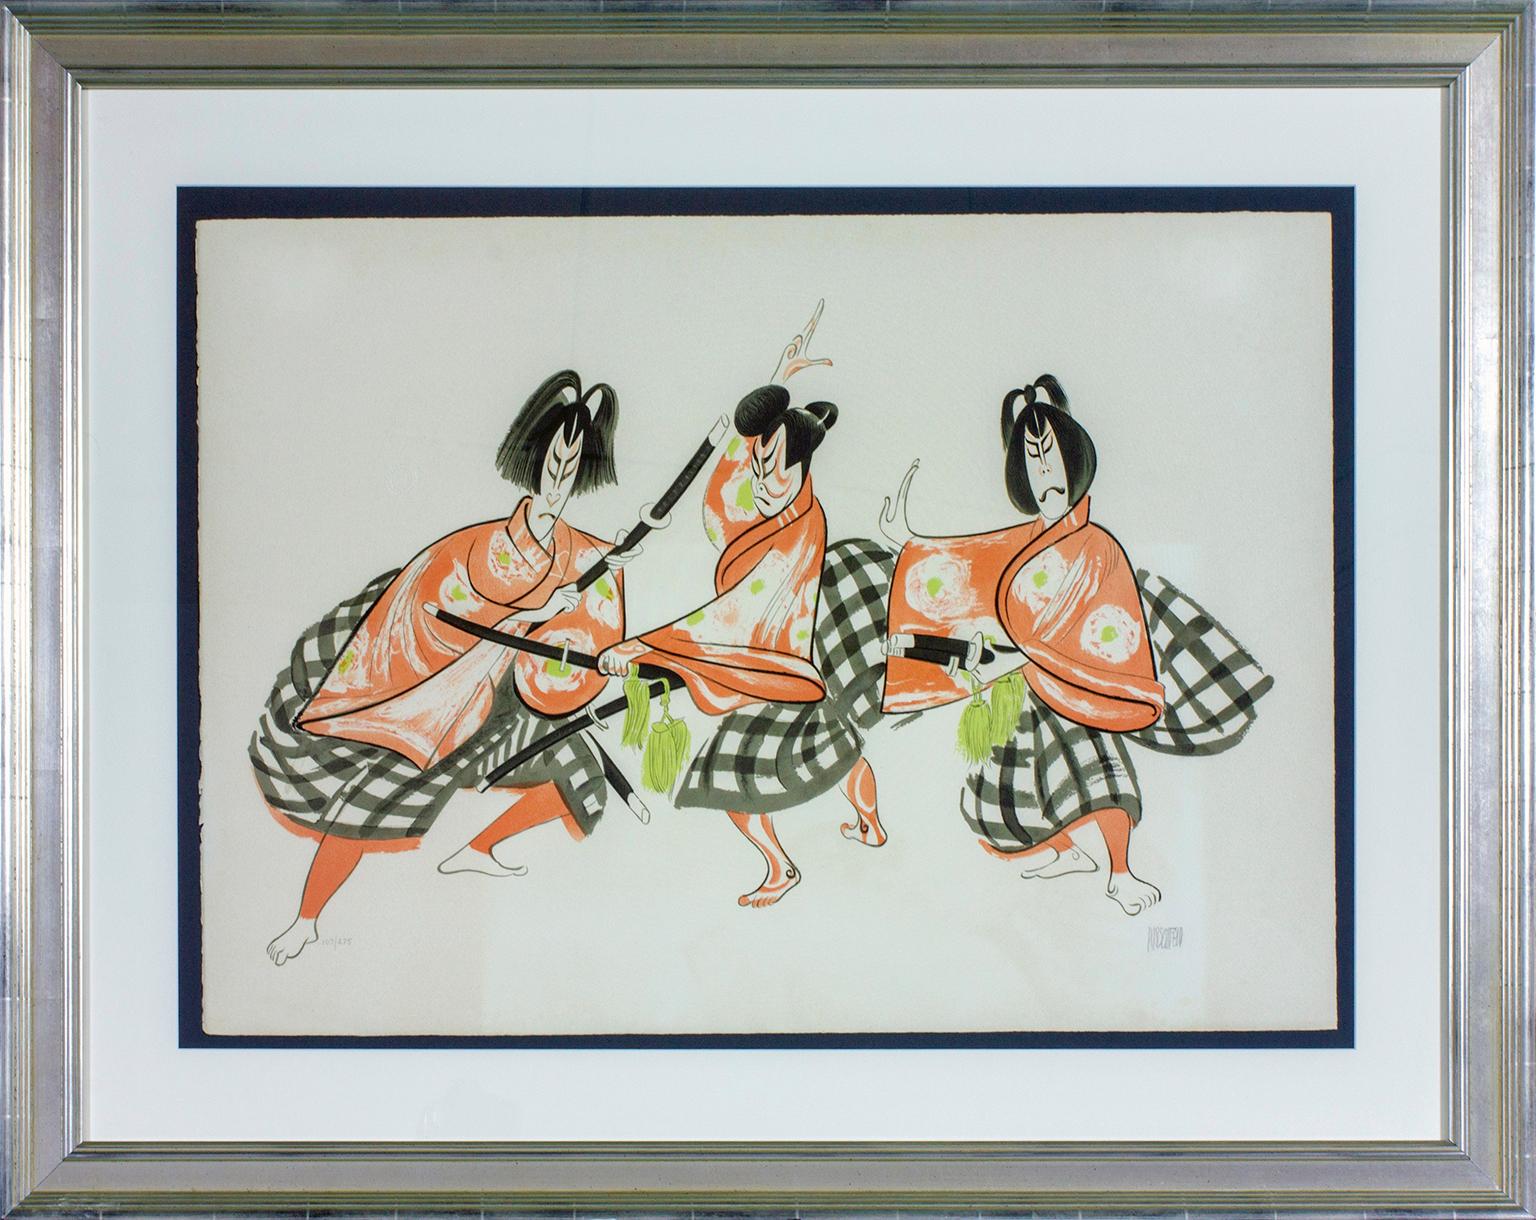 Albert Al Hirschfeld Figurative Print - "Sugawara" framed, hand-signed lithograph from "Kabuki Suite" by Al Hirschfeld